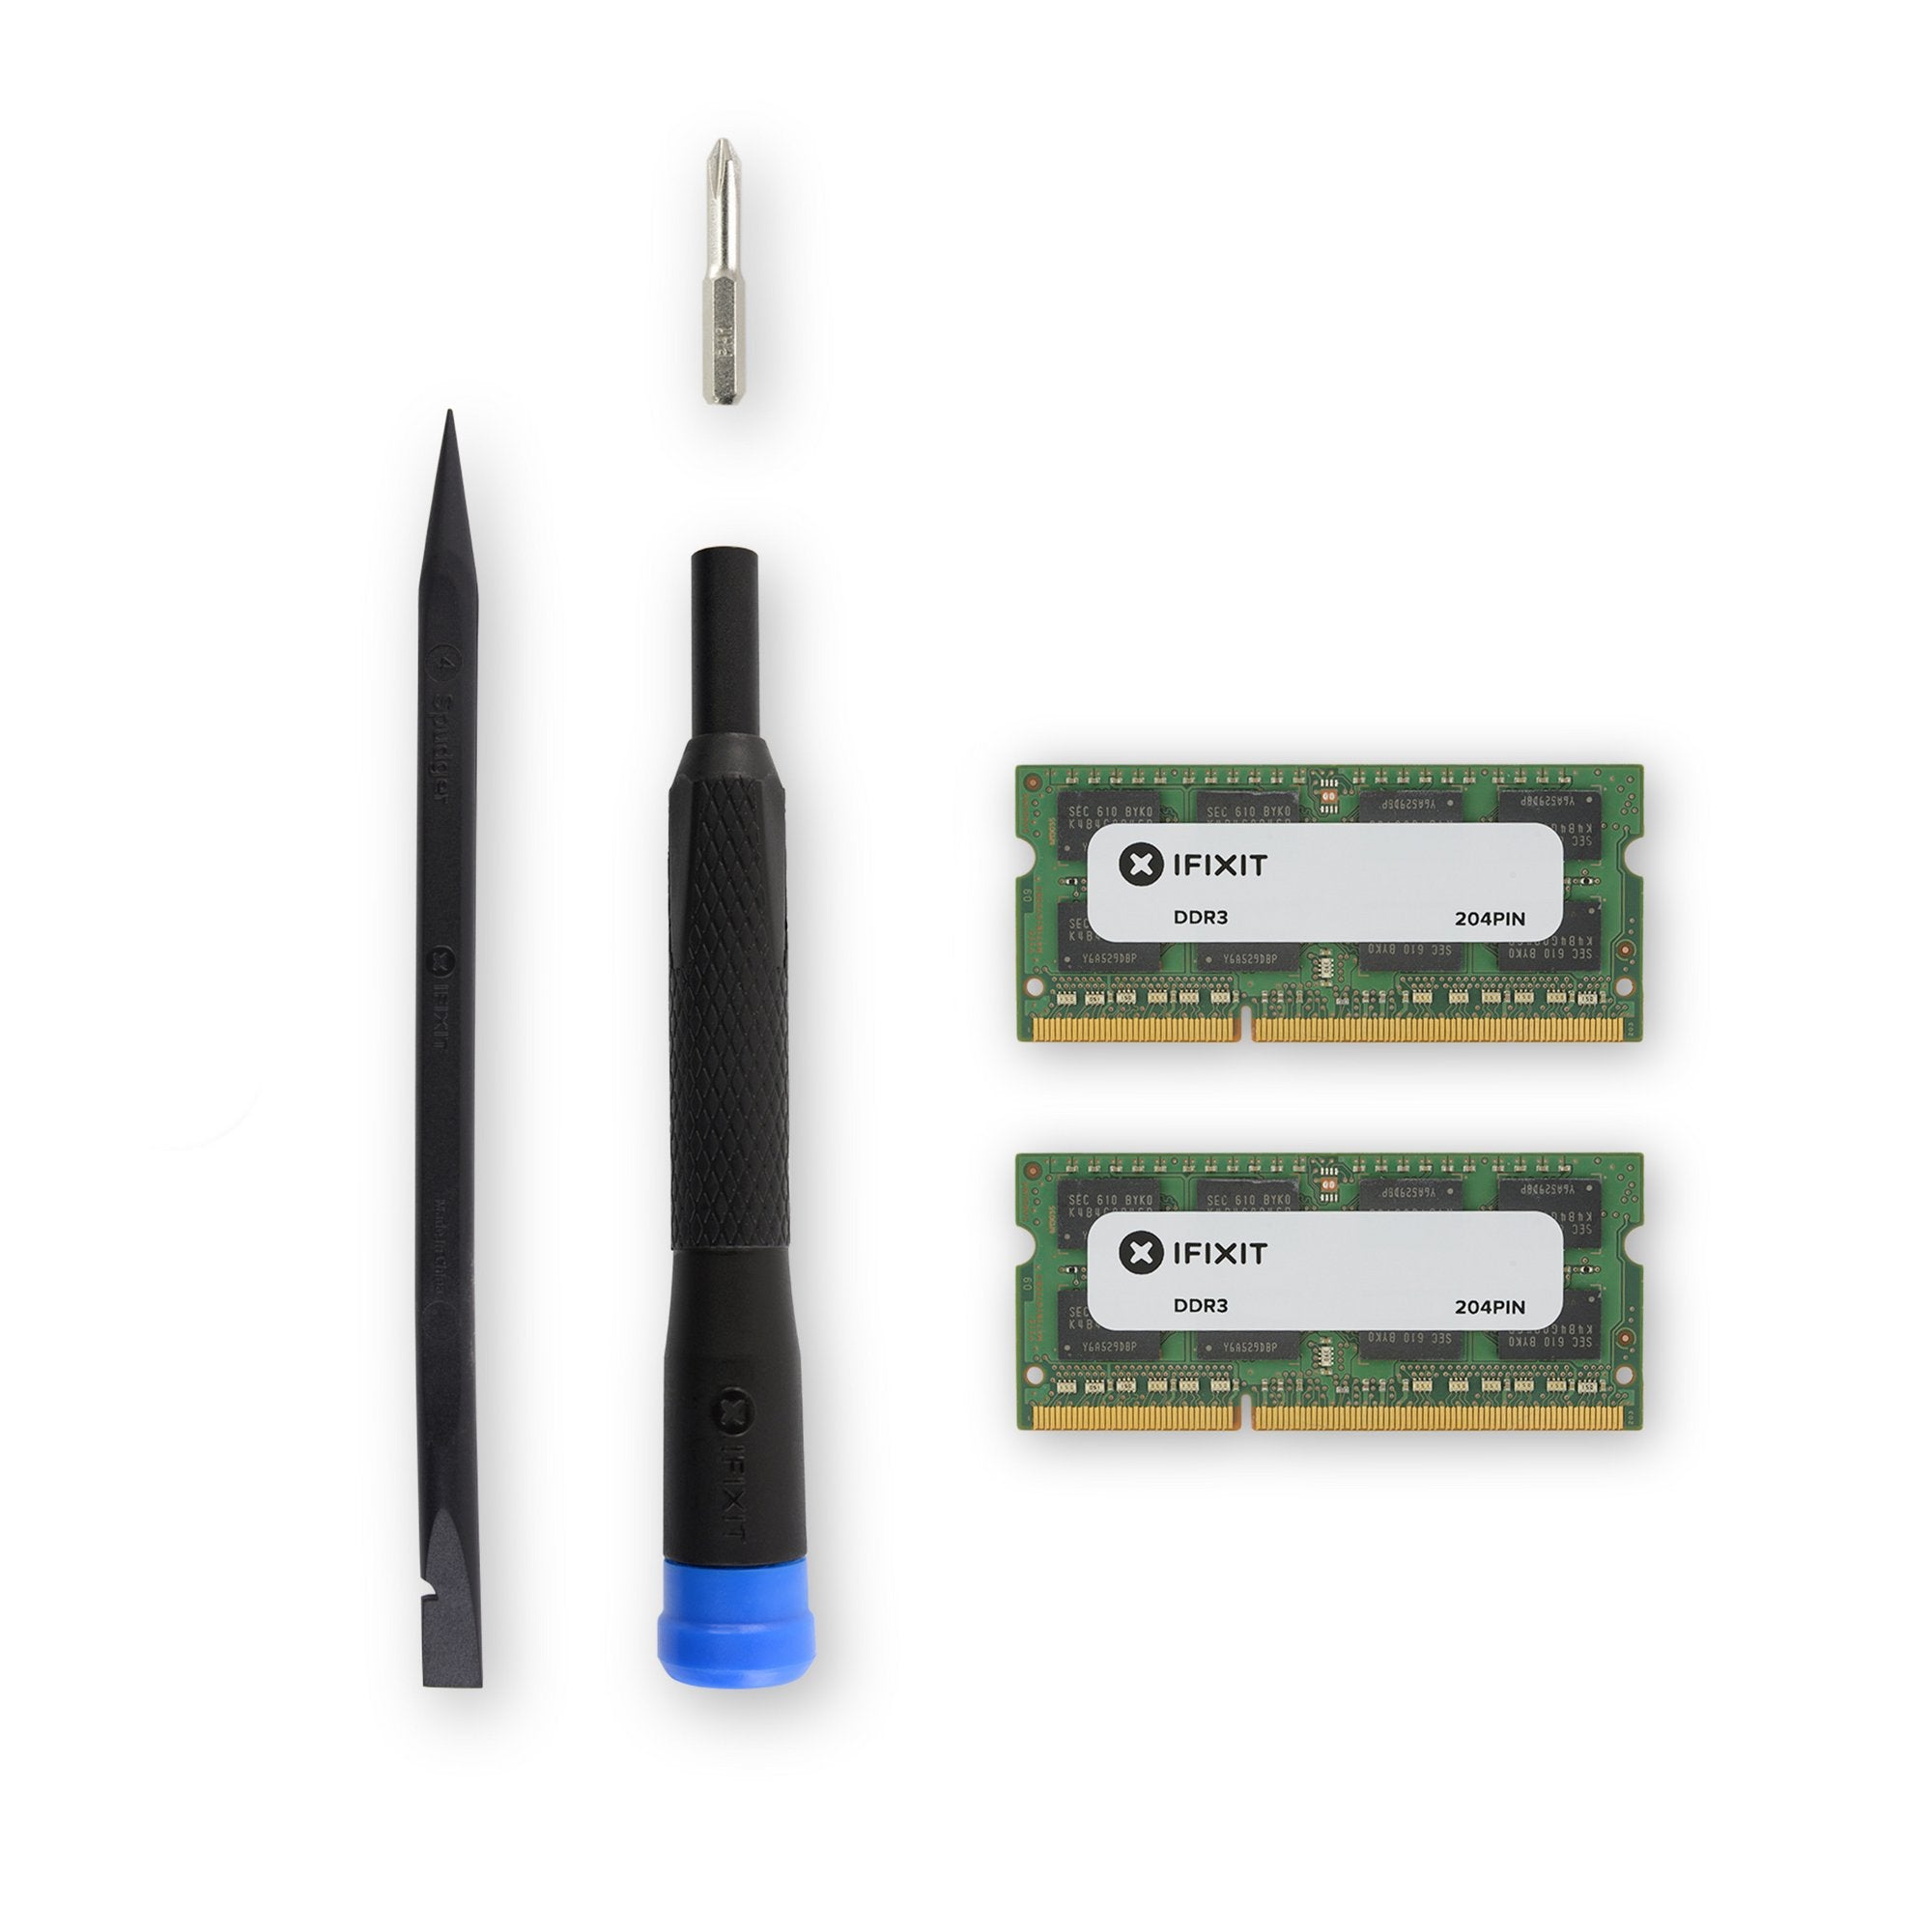 iMac Intel 20" EMC 2266 (Early 2009) Memory Maxxer RAM Upgrade Kit